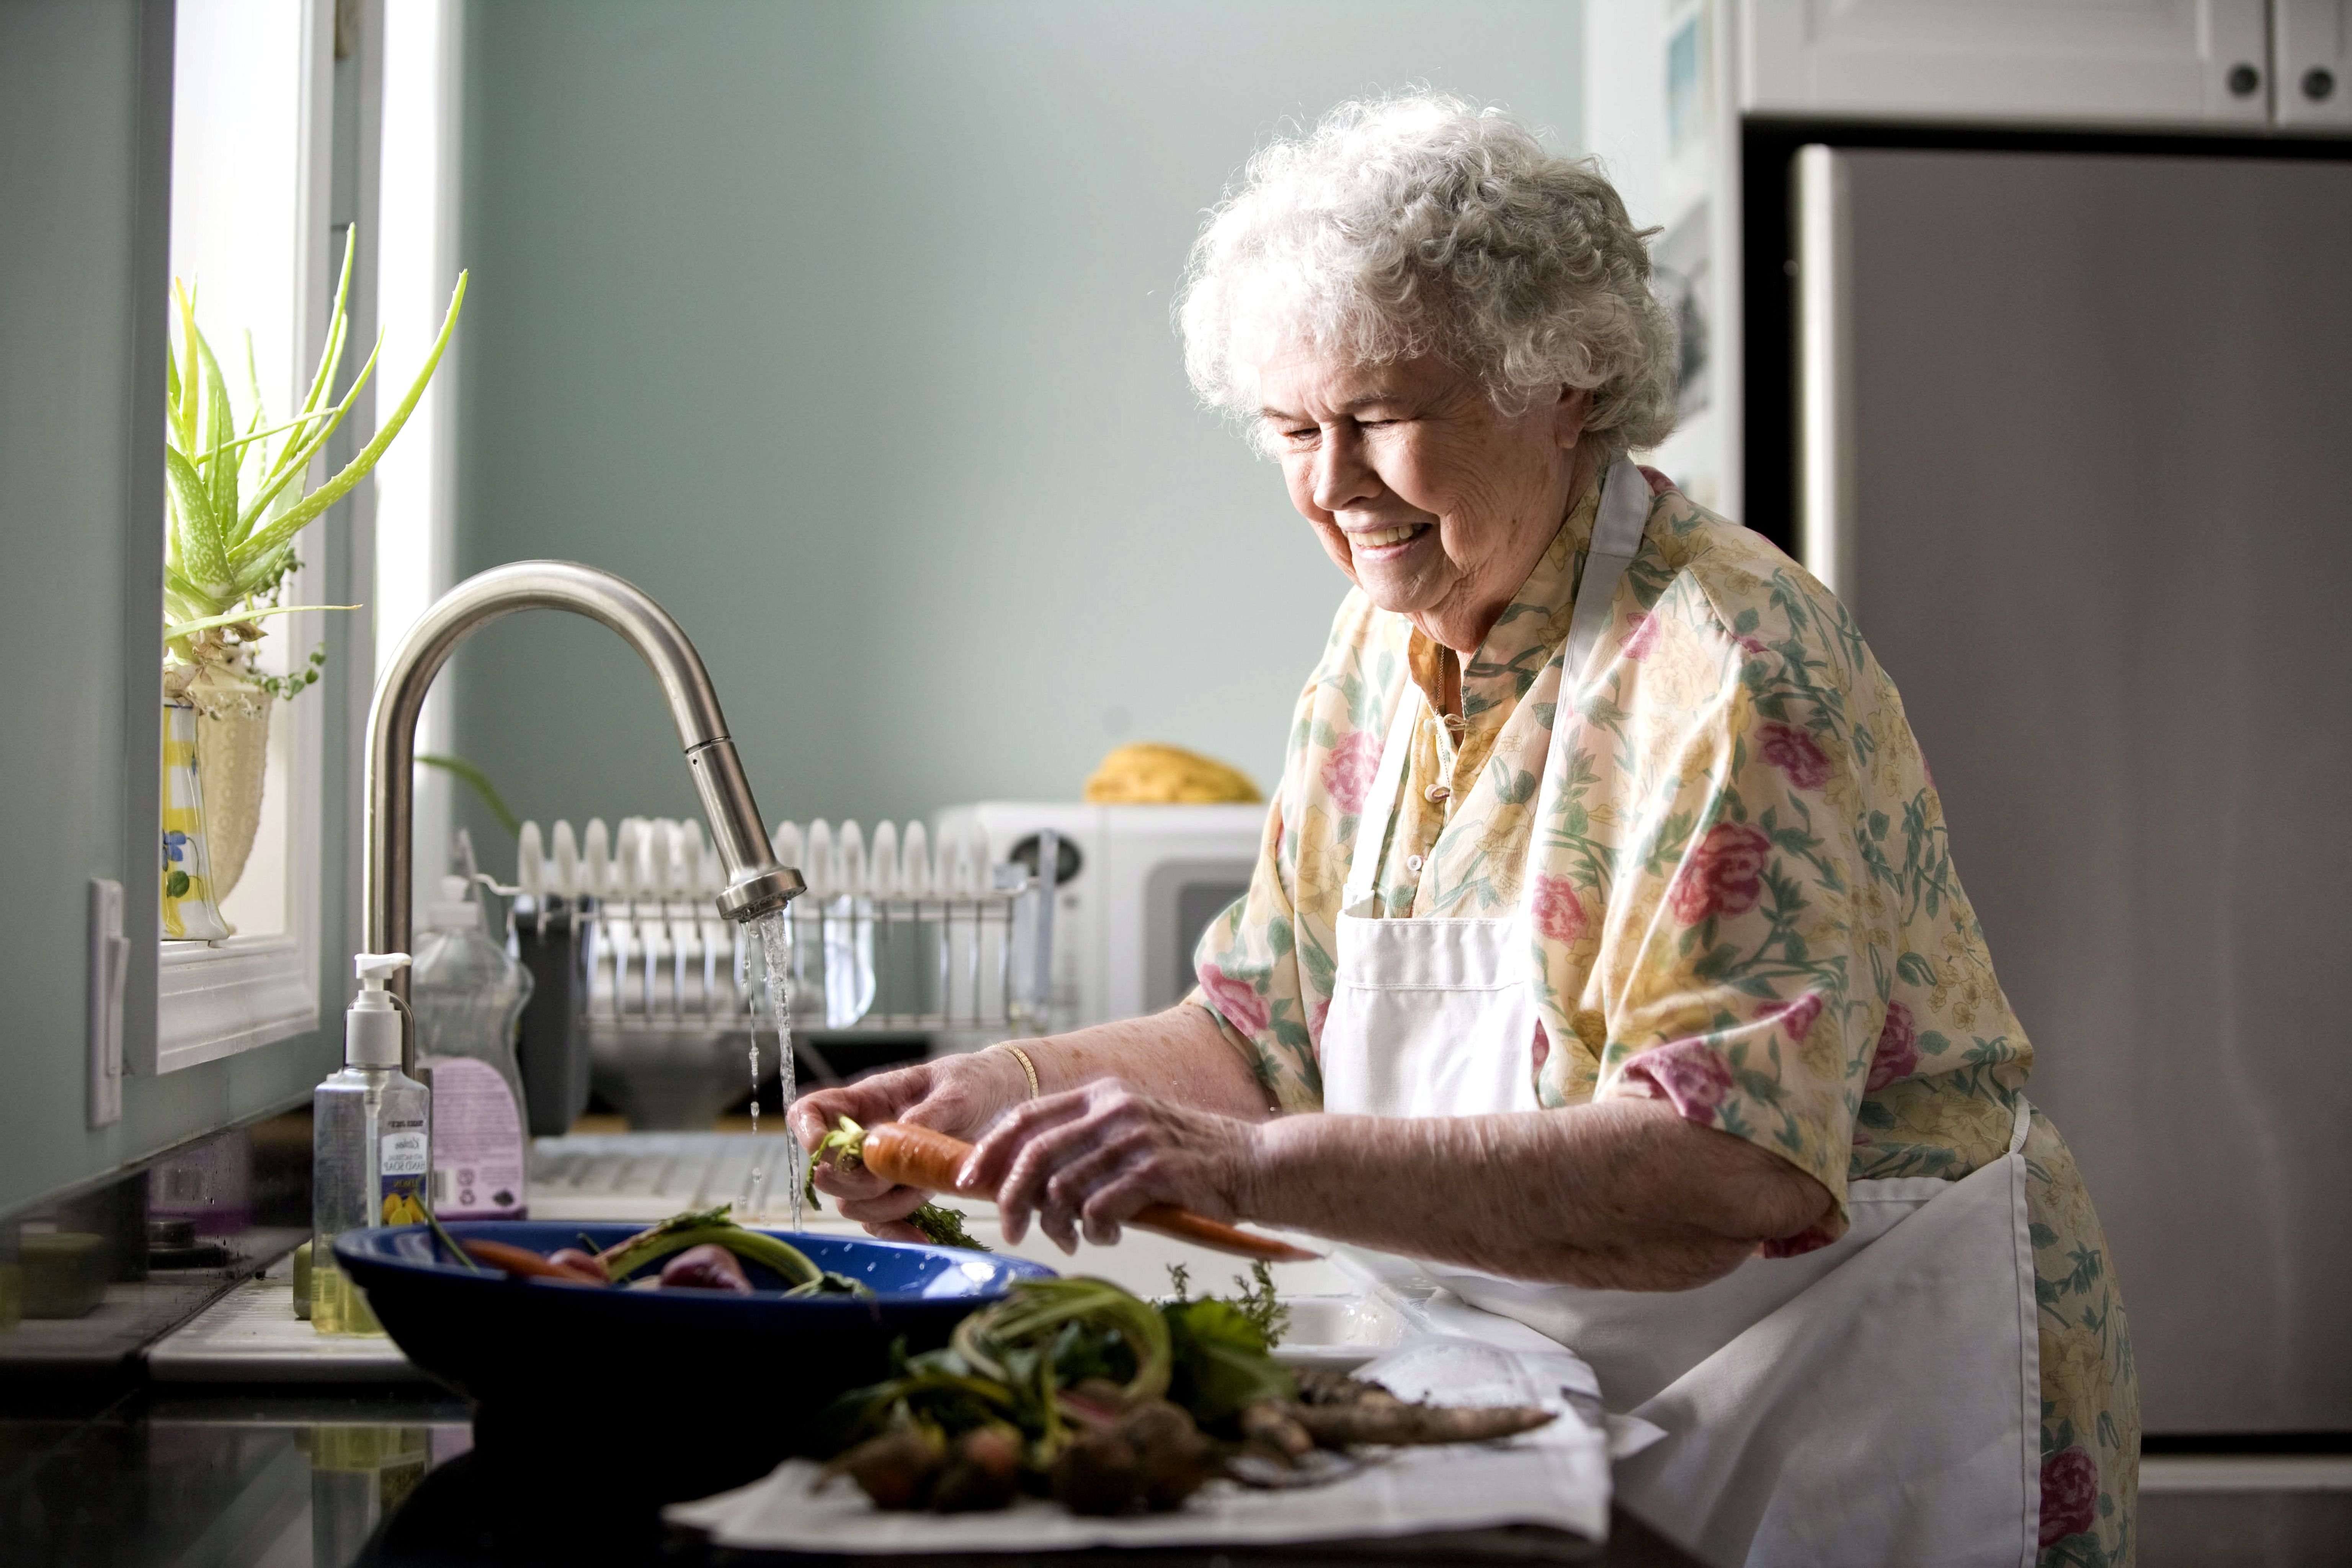 Free picture: portrait, elderly, woman, kitchen, preparing, meal